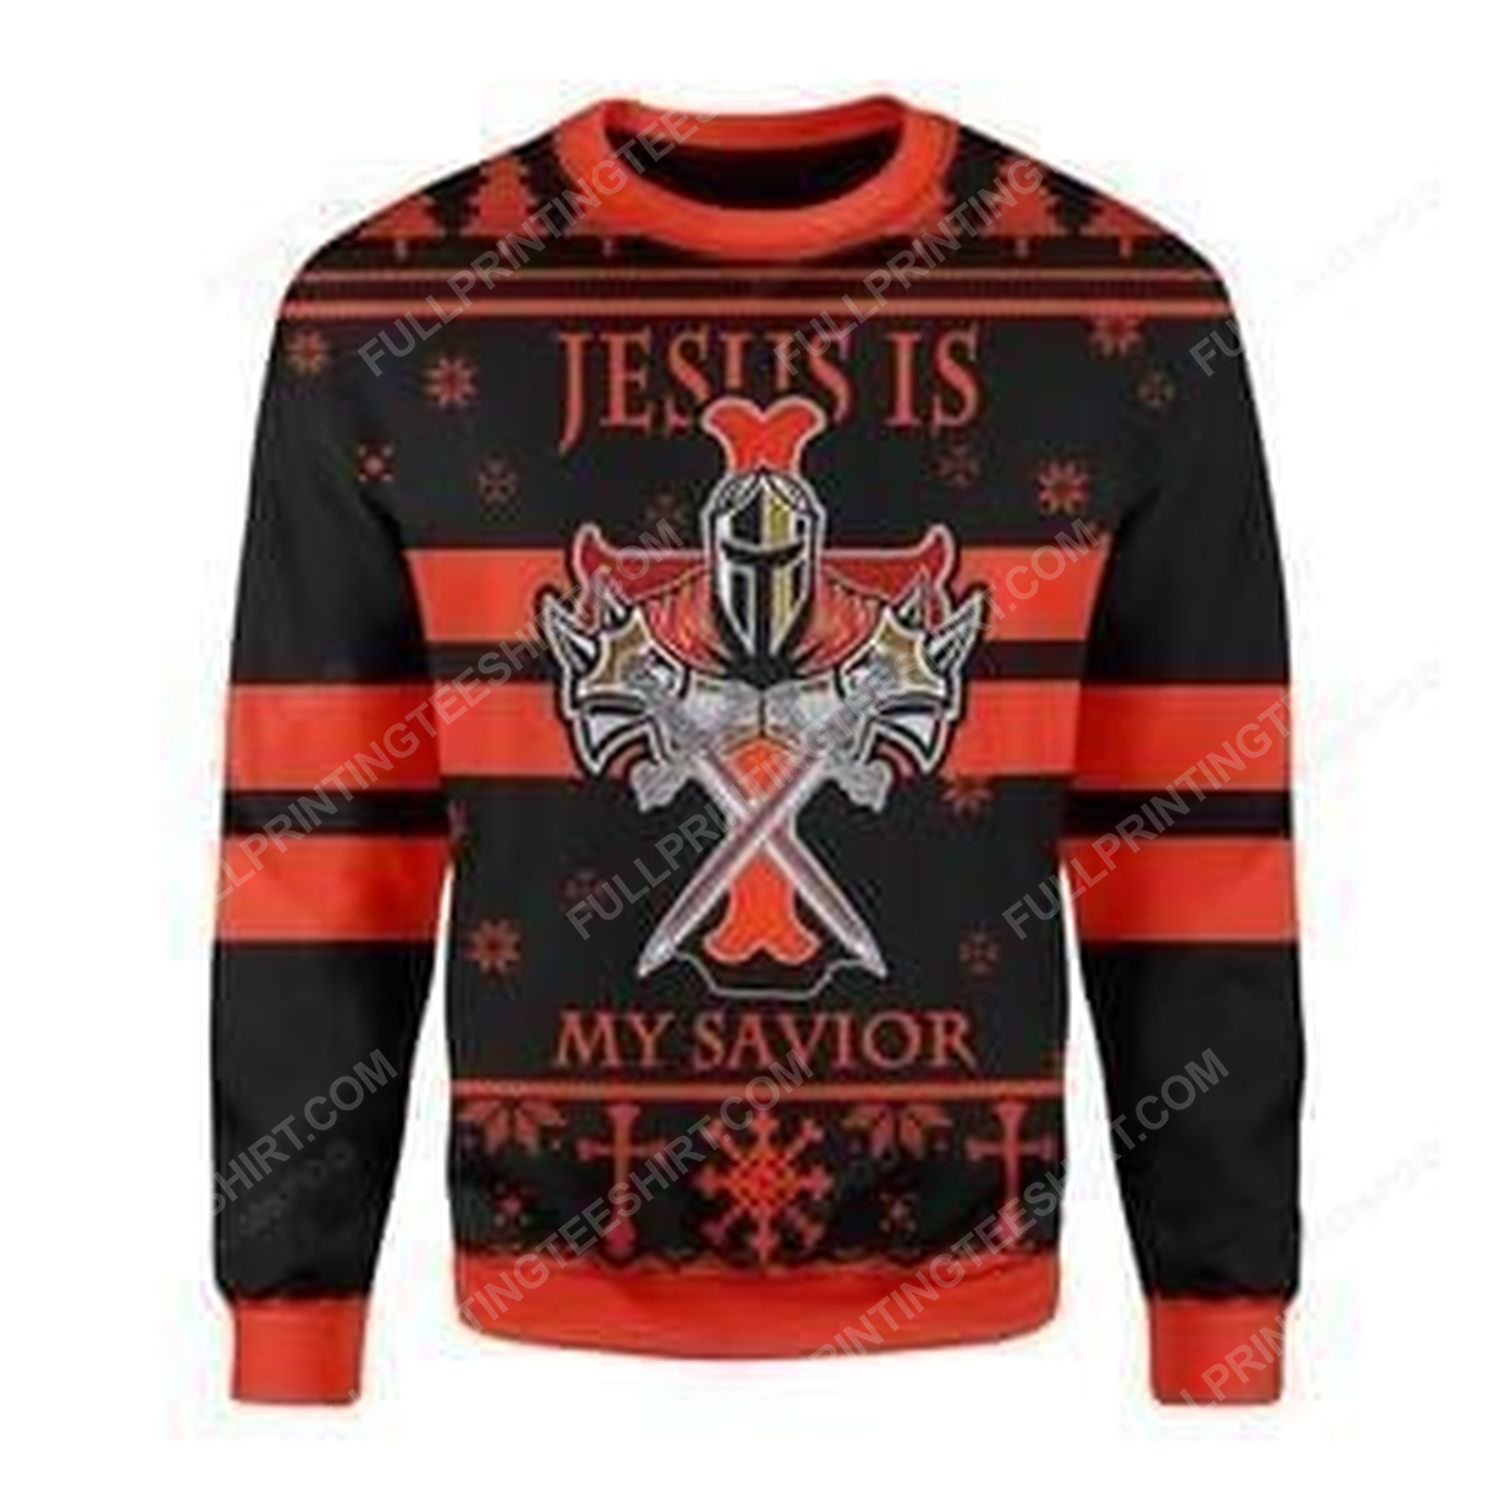 Knight templar Jesus is my savior full print ugly christmas sweater